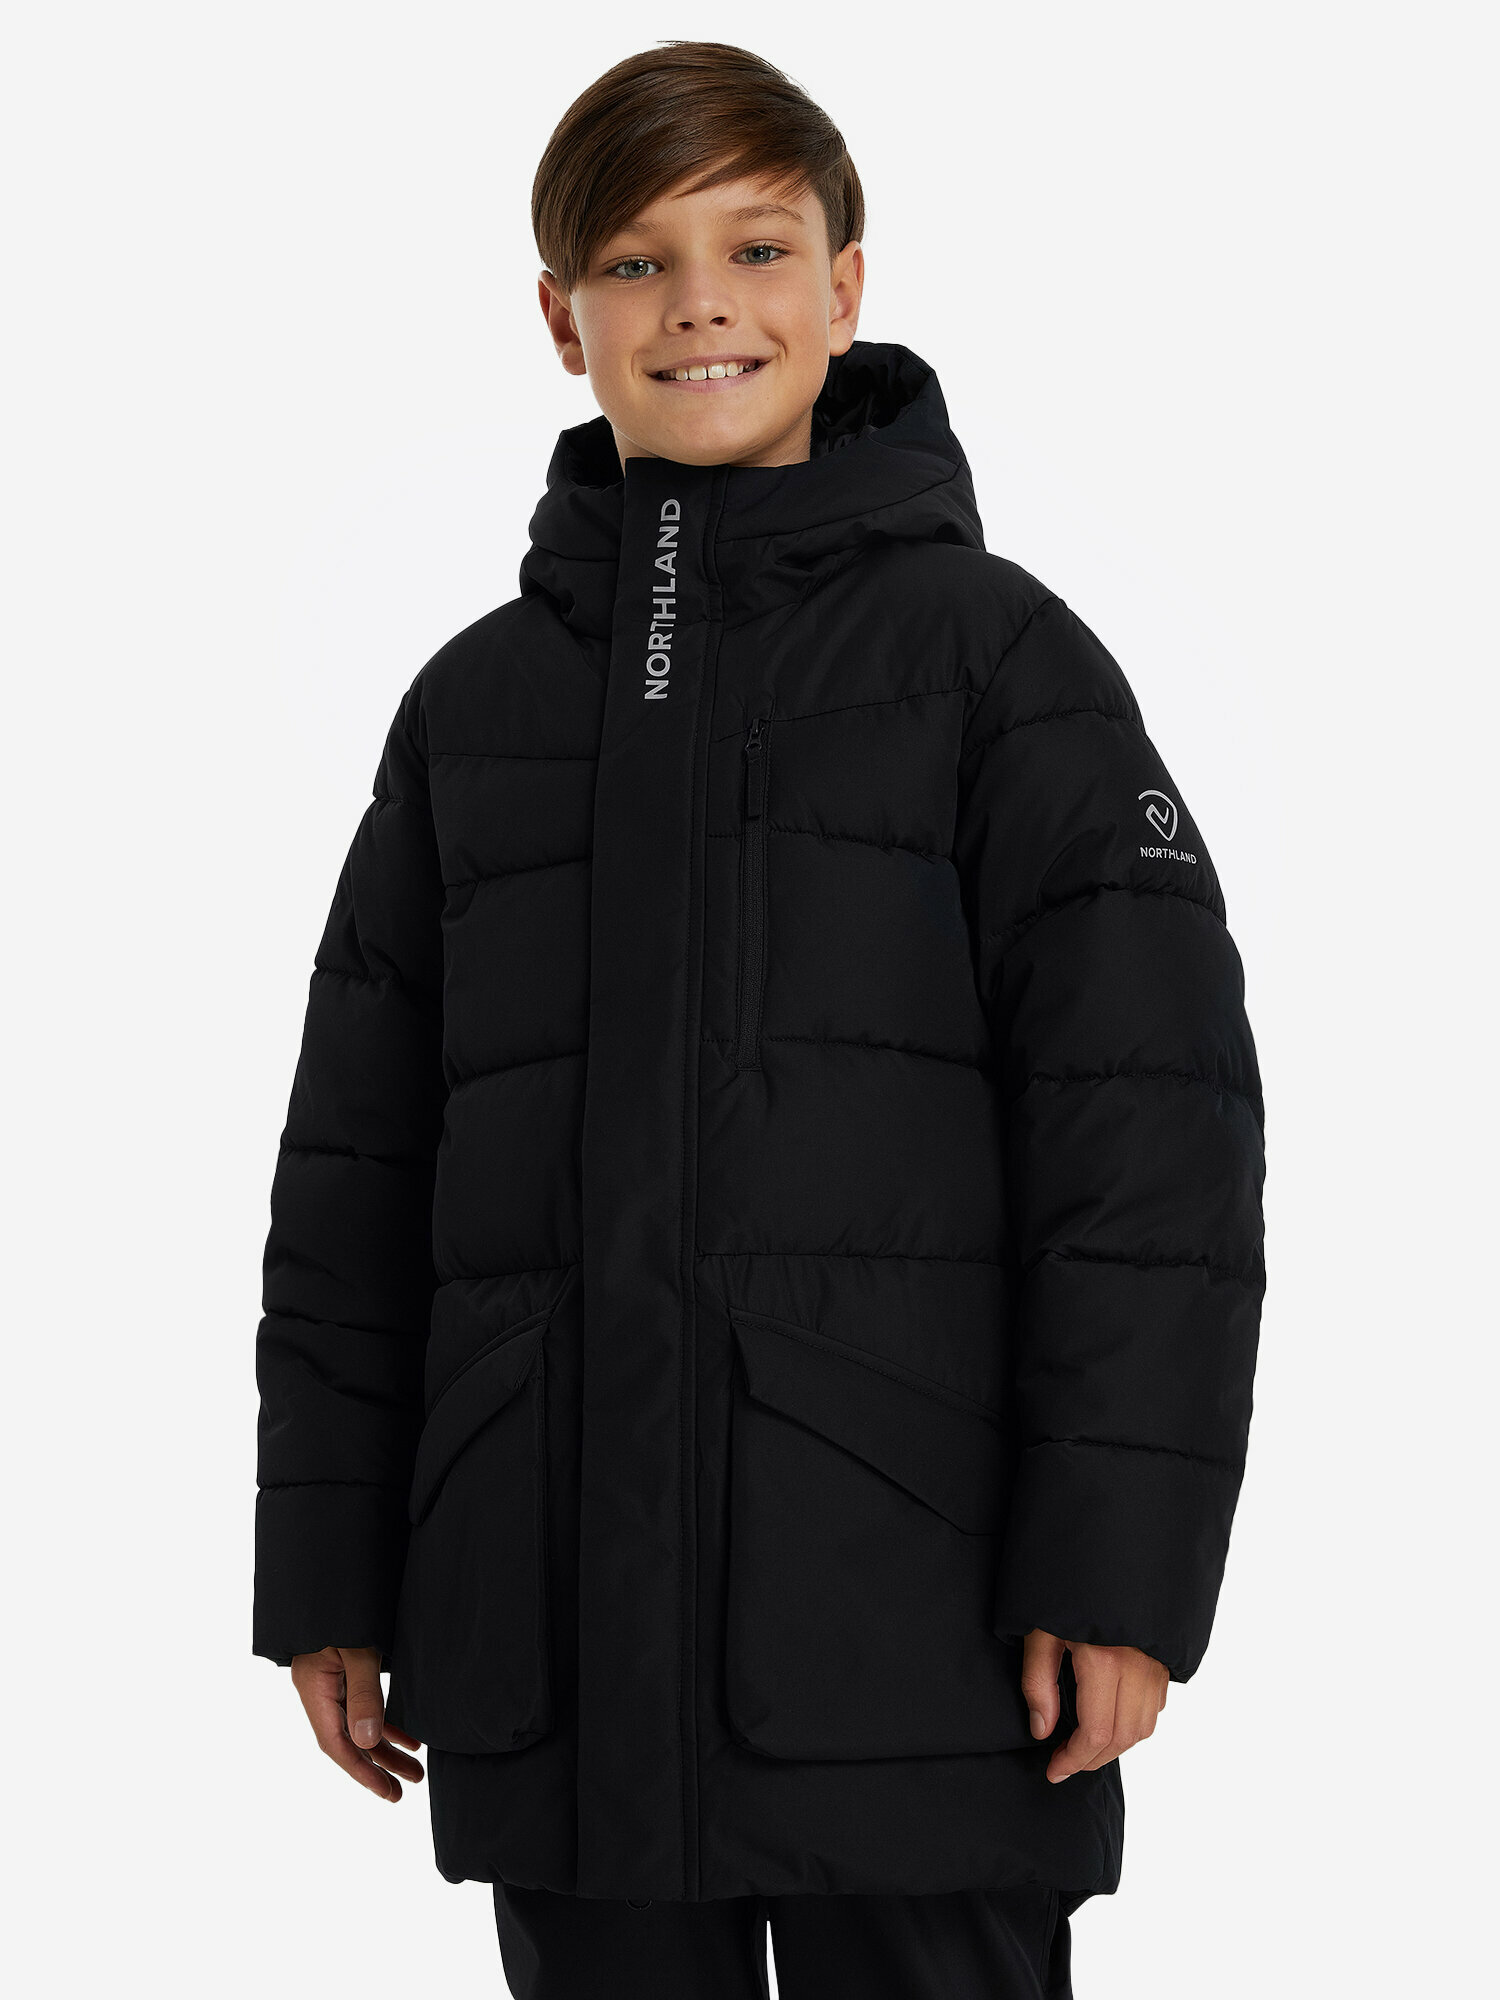 Куртка Northland Черный Размер RUS 152-158